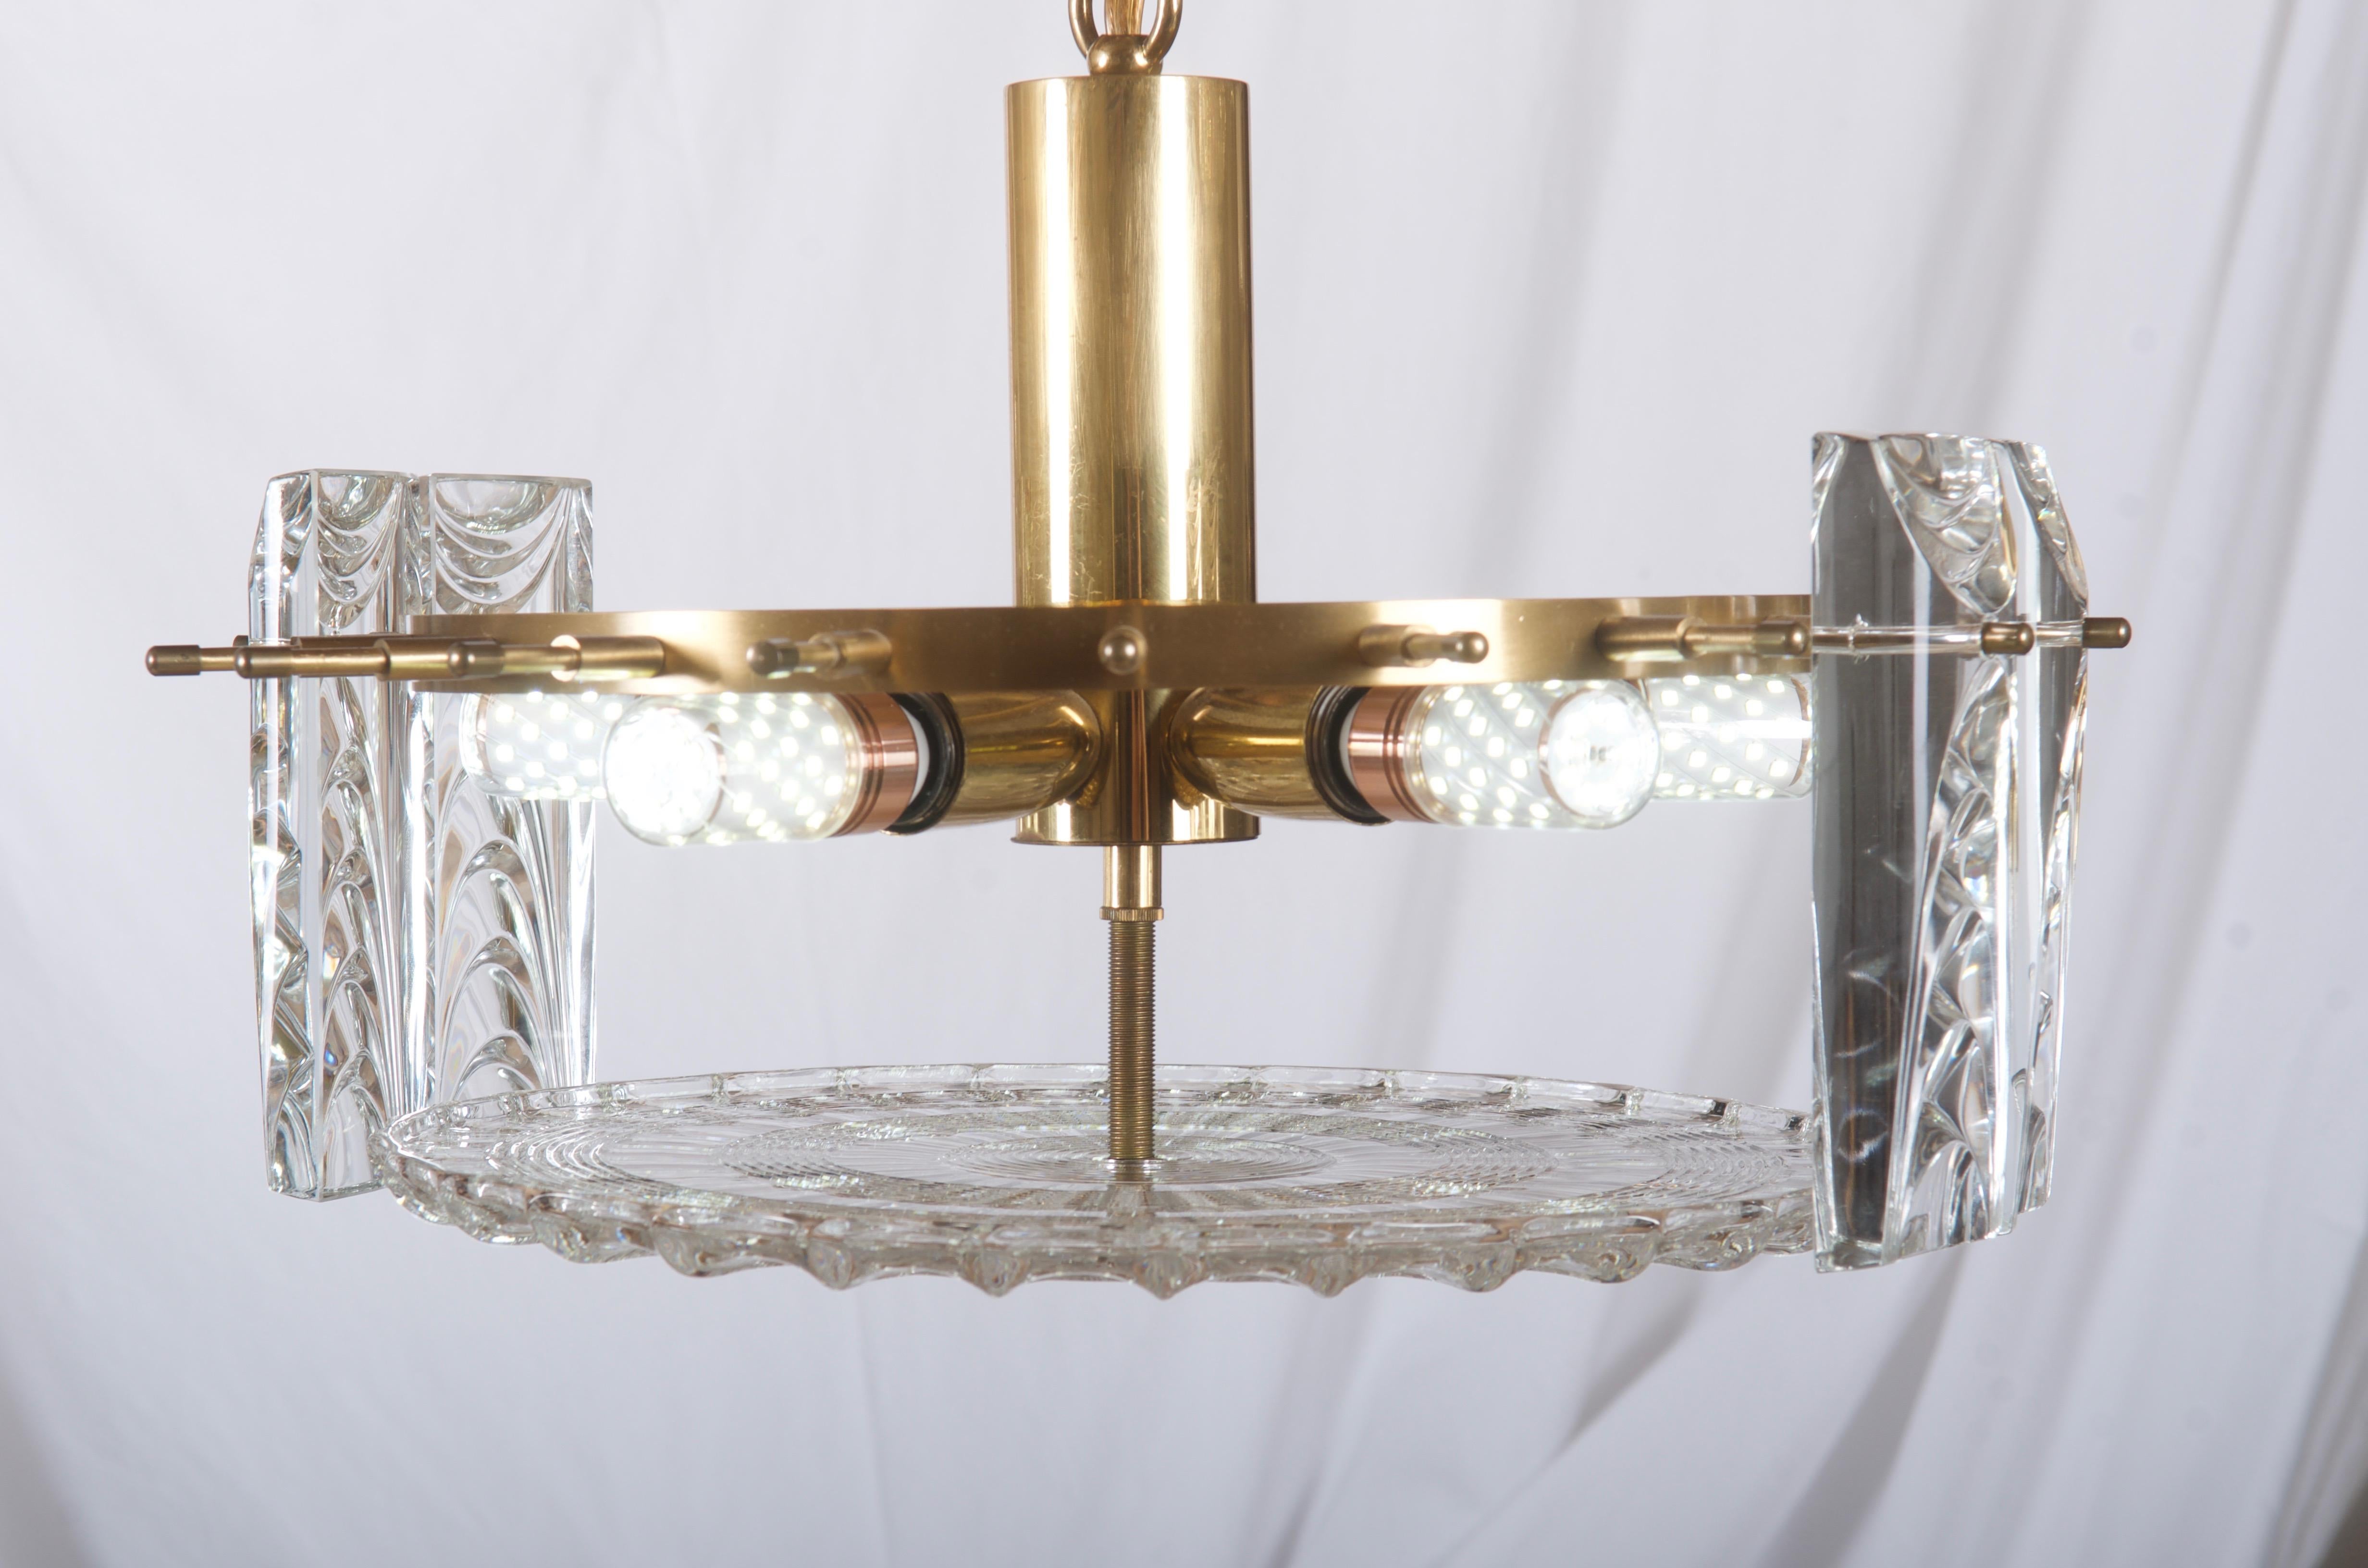 Danish Midcentury Glass, Brass Chandelier by Vitrika For Sale 7